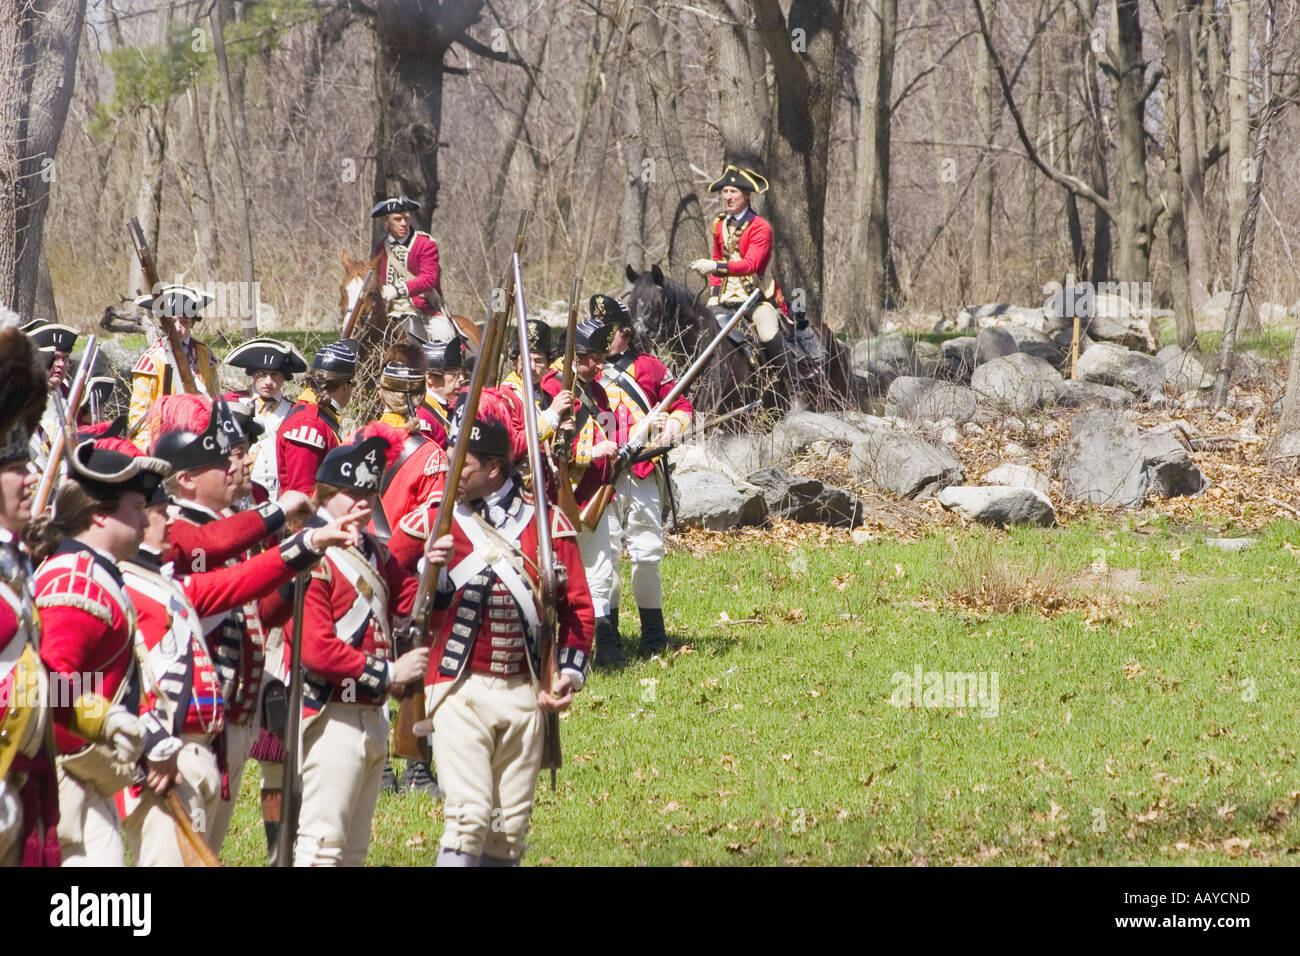 British frontline at battle reenactment Concord Massachusetts Stock Photo